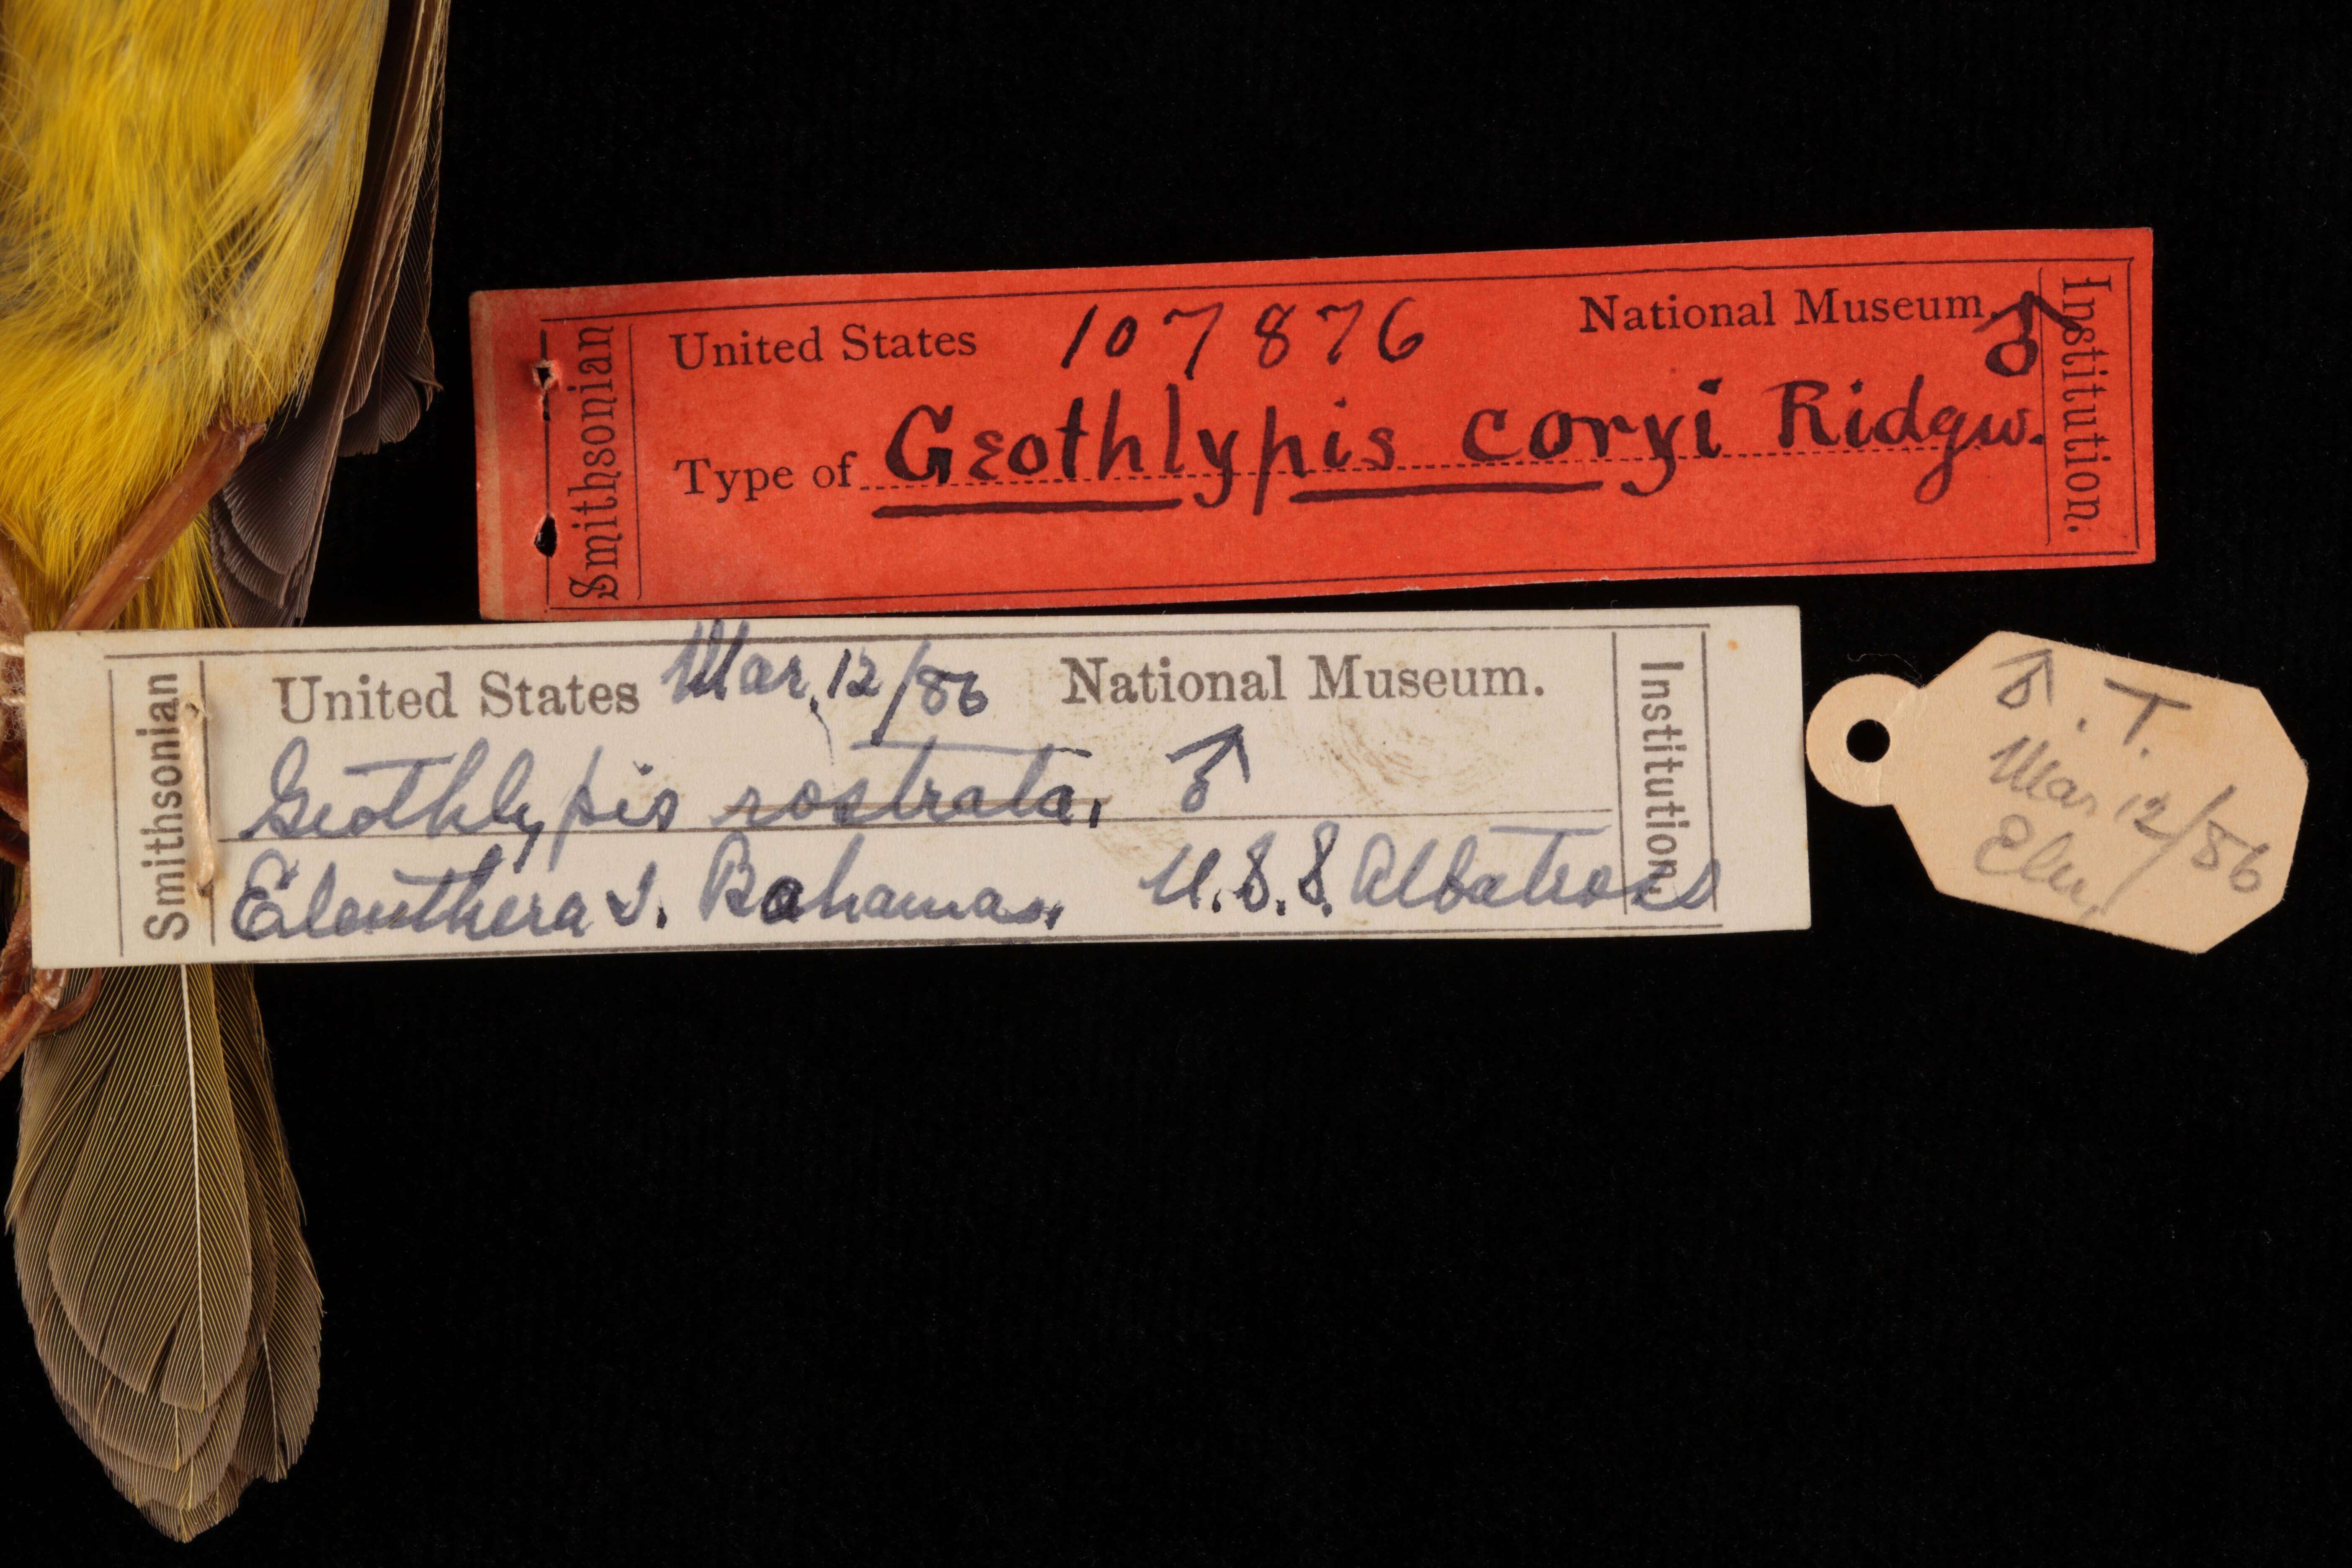 Image of Geothlypis rostrata coryi Ridgway 1886